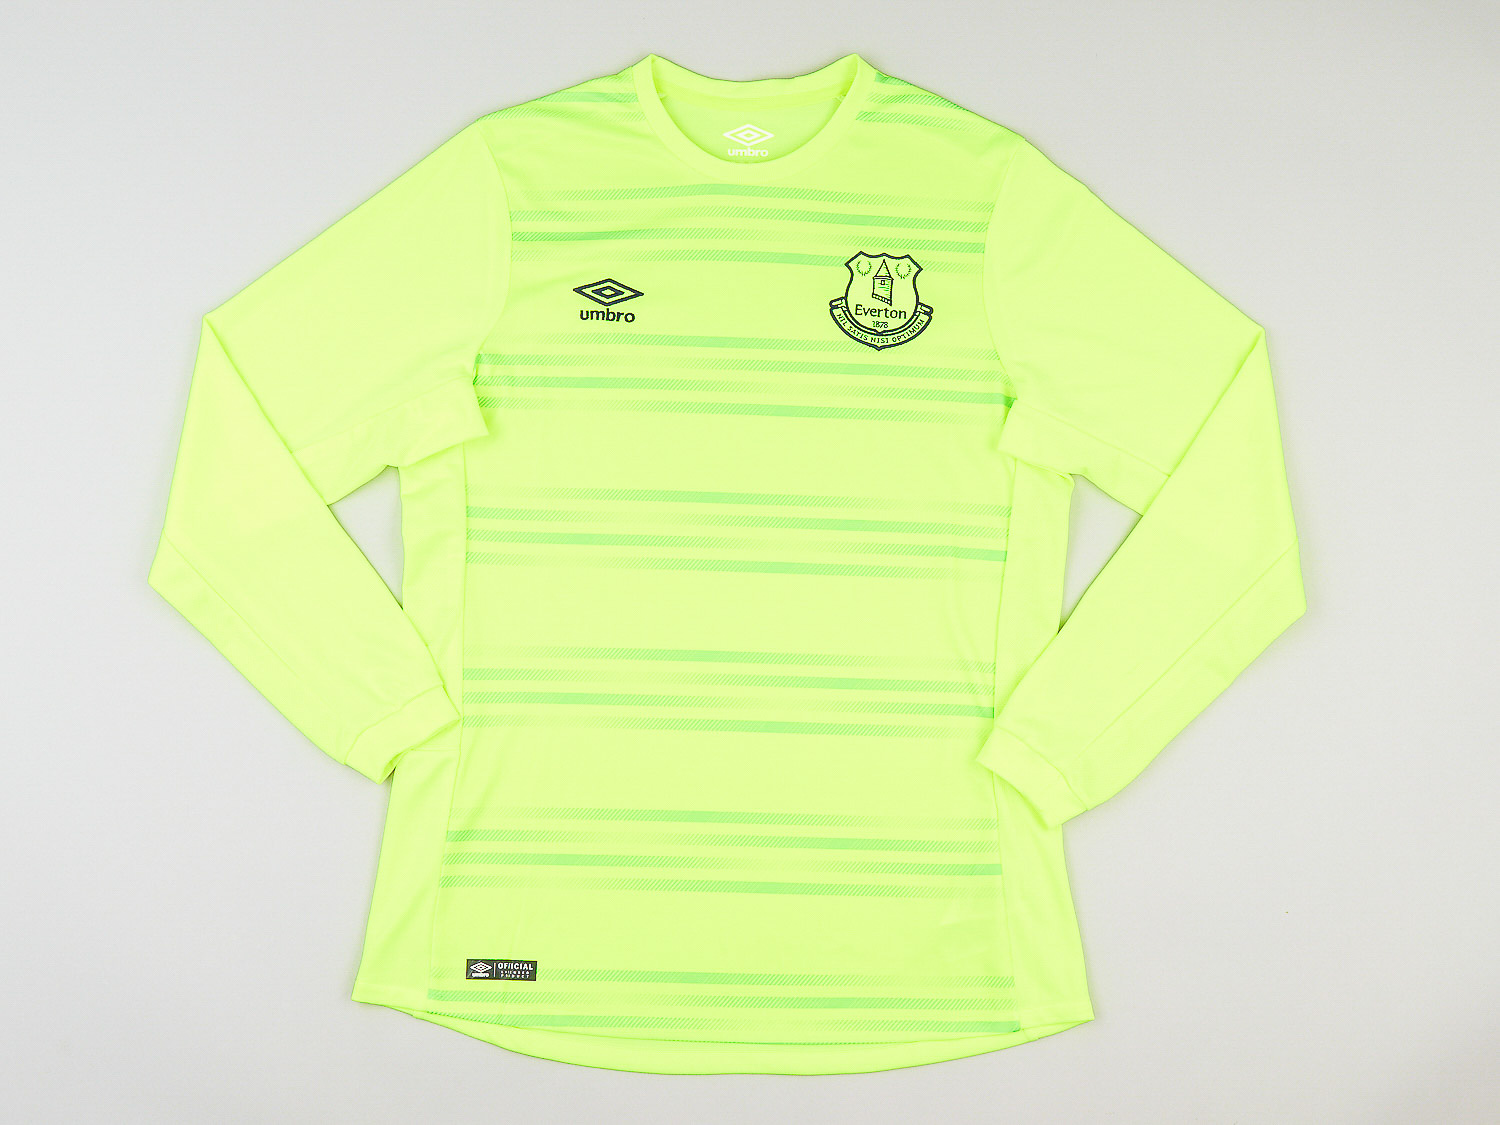 2010s Everton Umbro GK Shirt